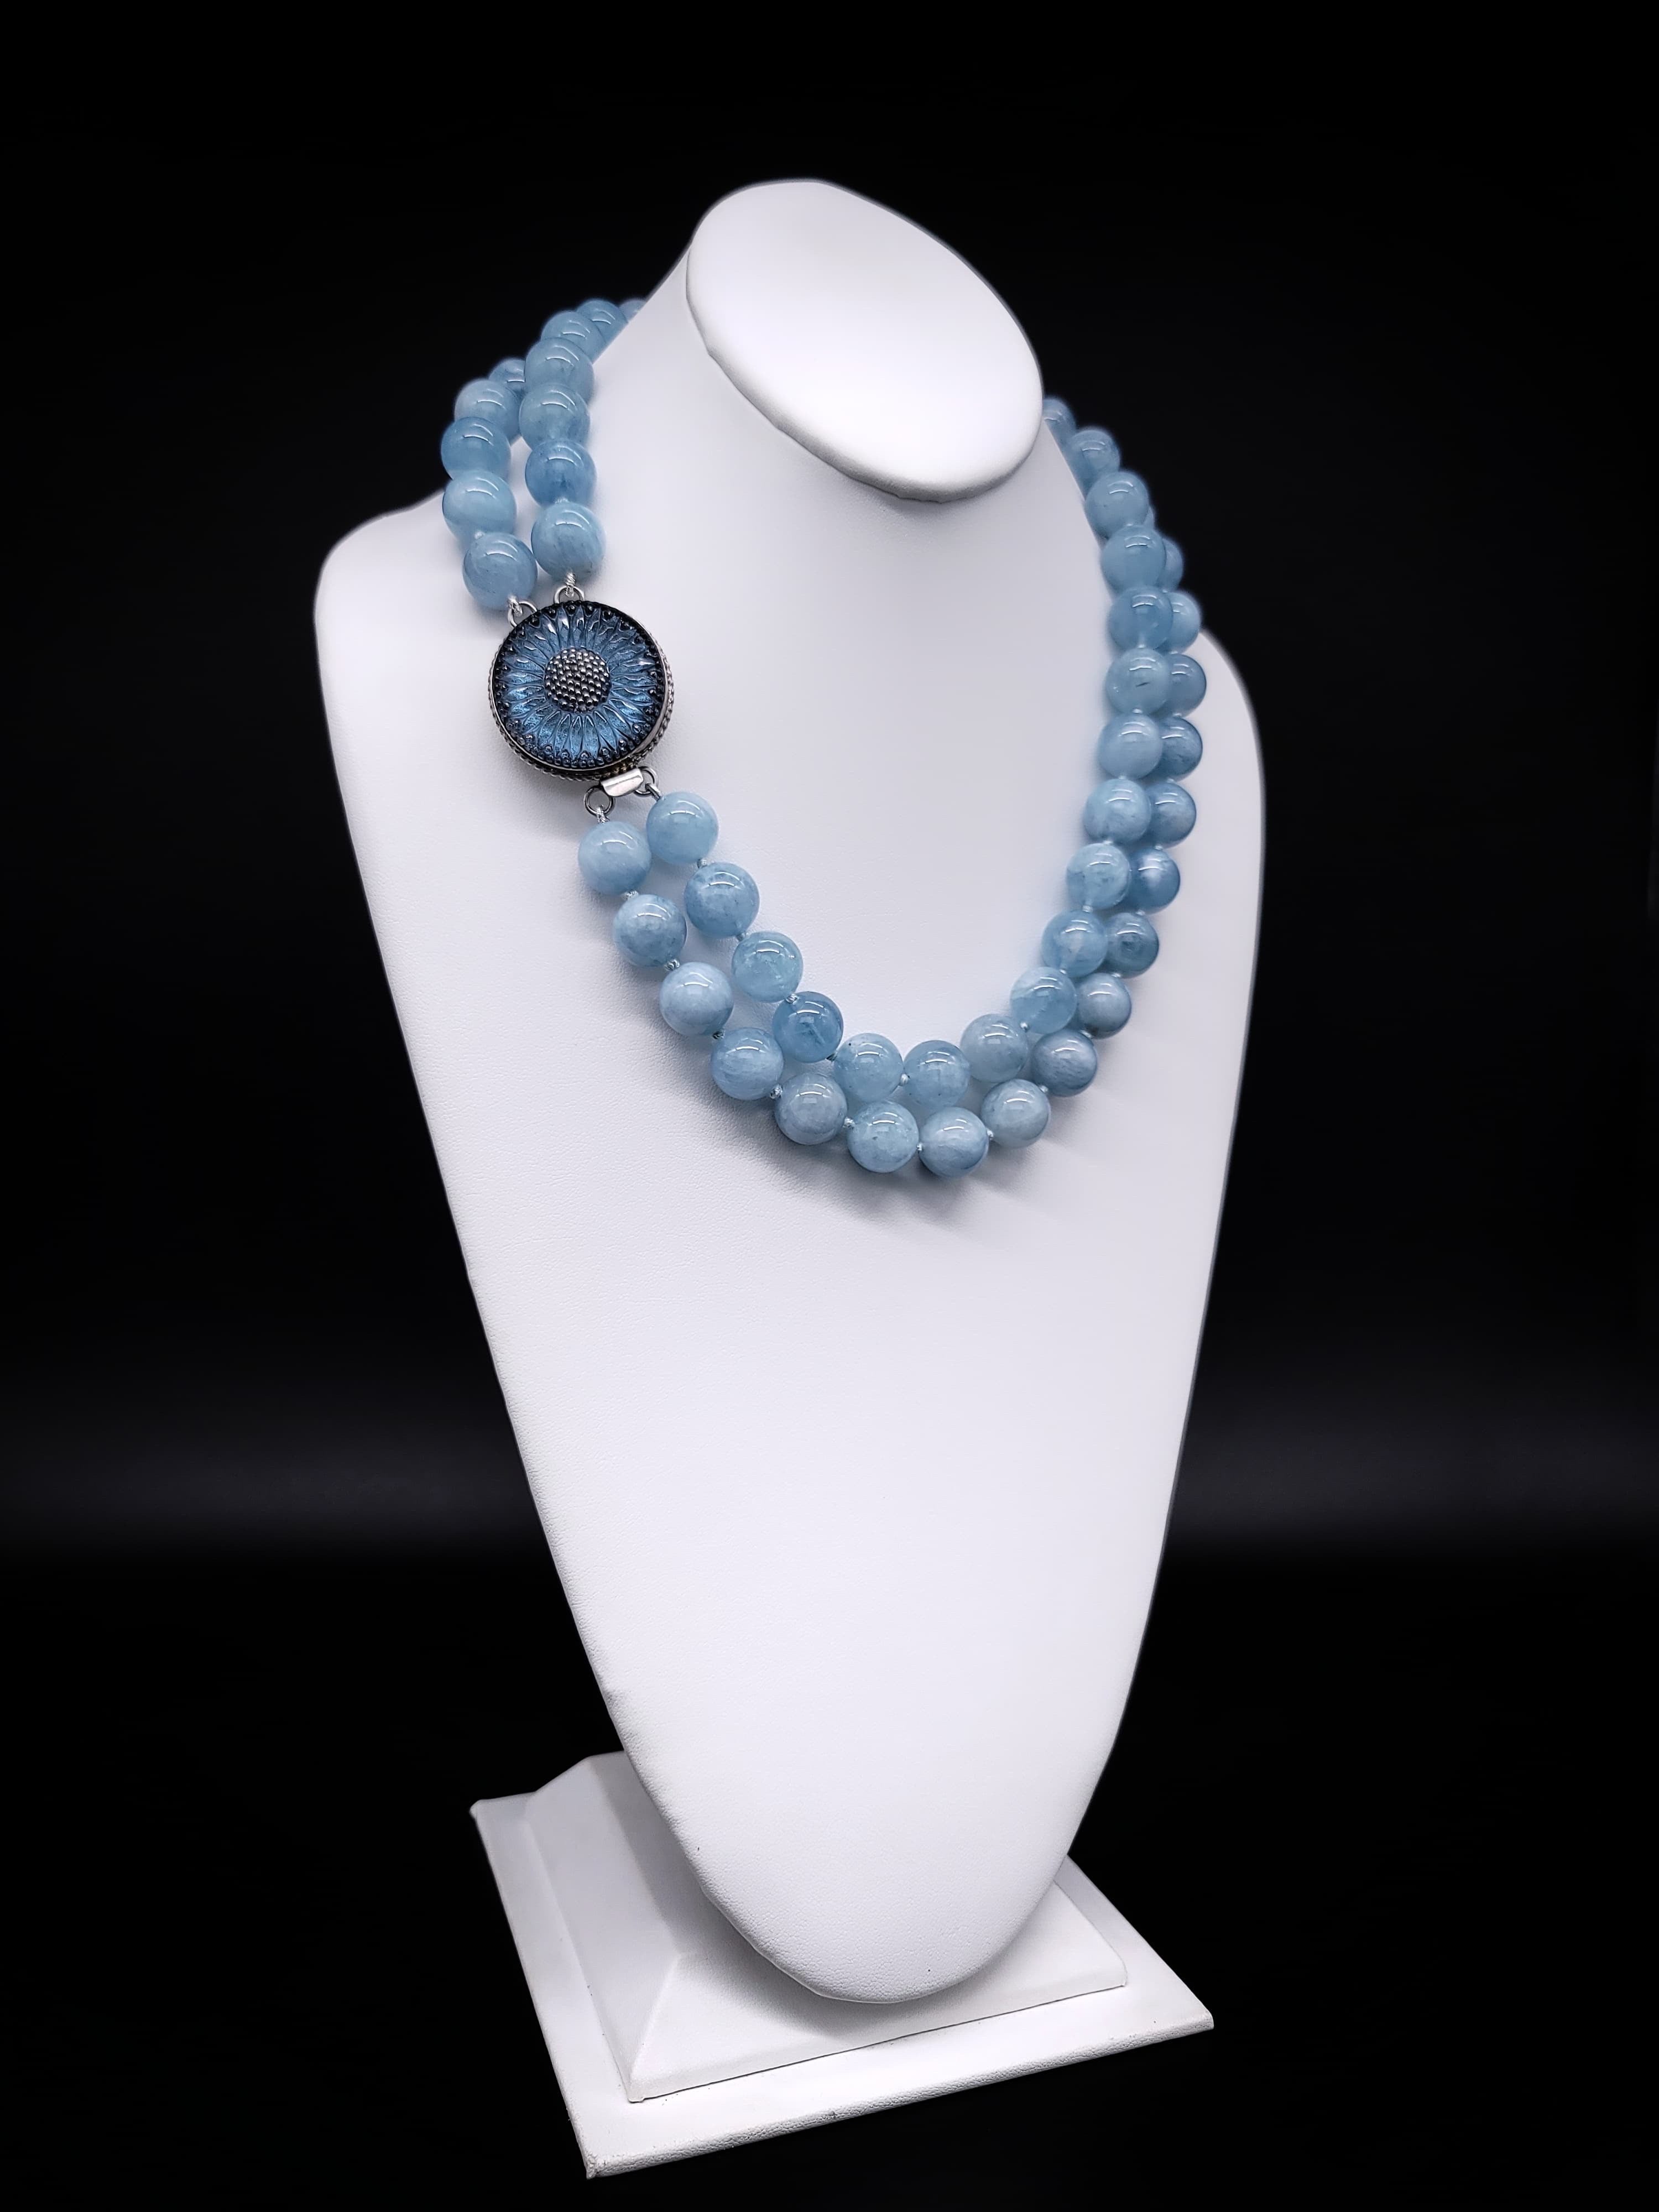 Aquamarine Blue Beryl necklace is just plain beautiful. For Sale